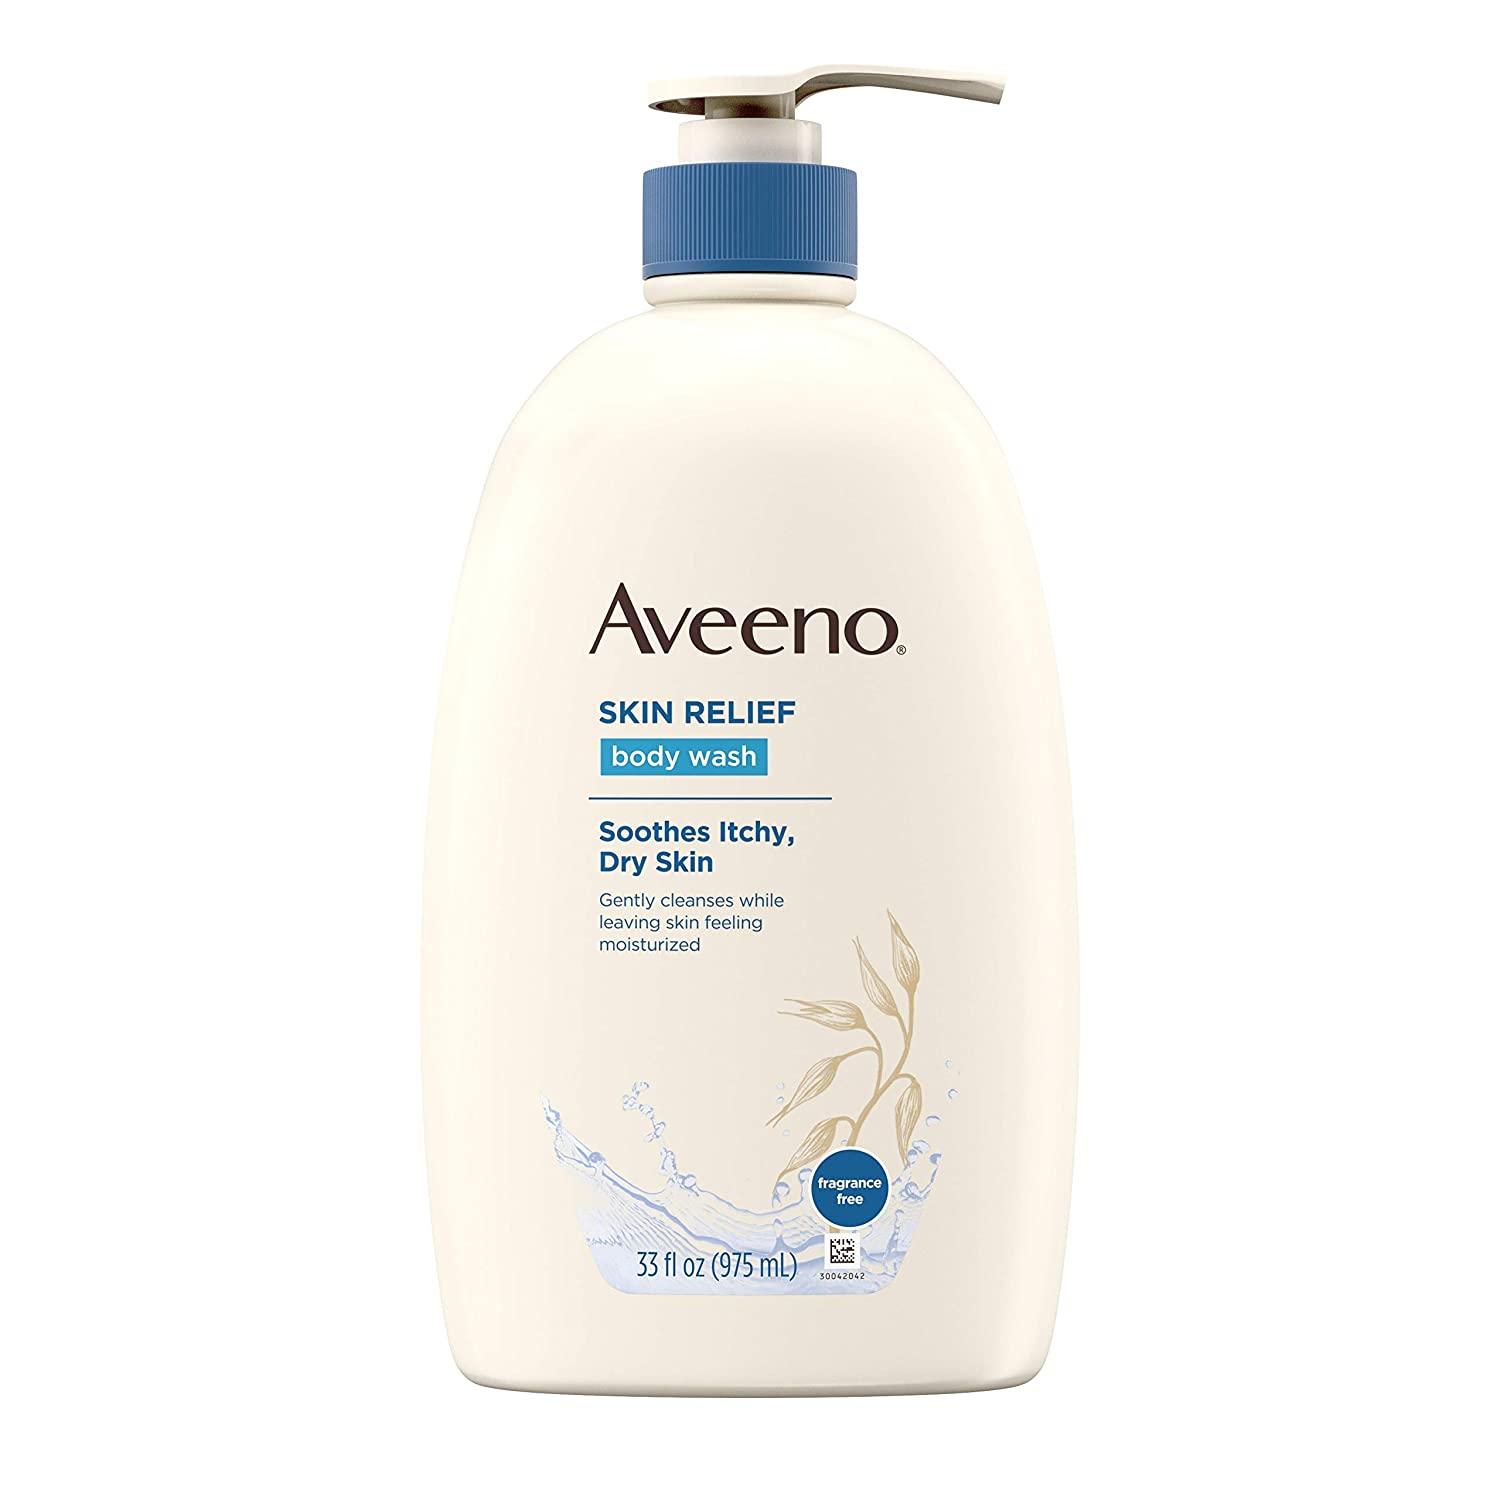 33oz Aveeno Skin Relief Body Wash for $5.21 Shipped